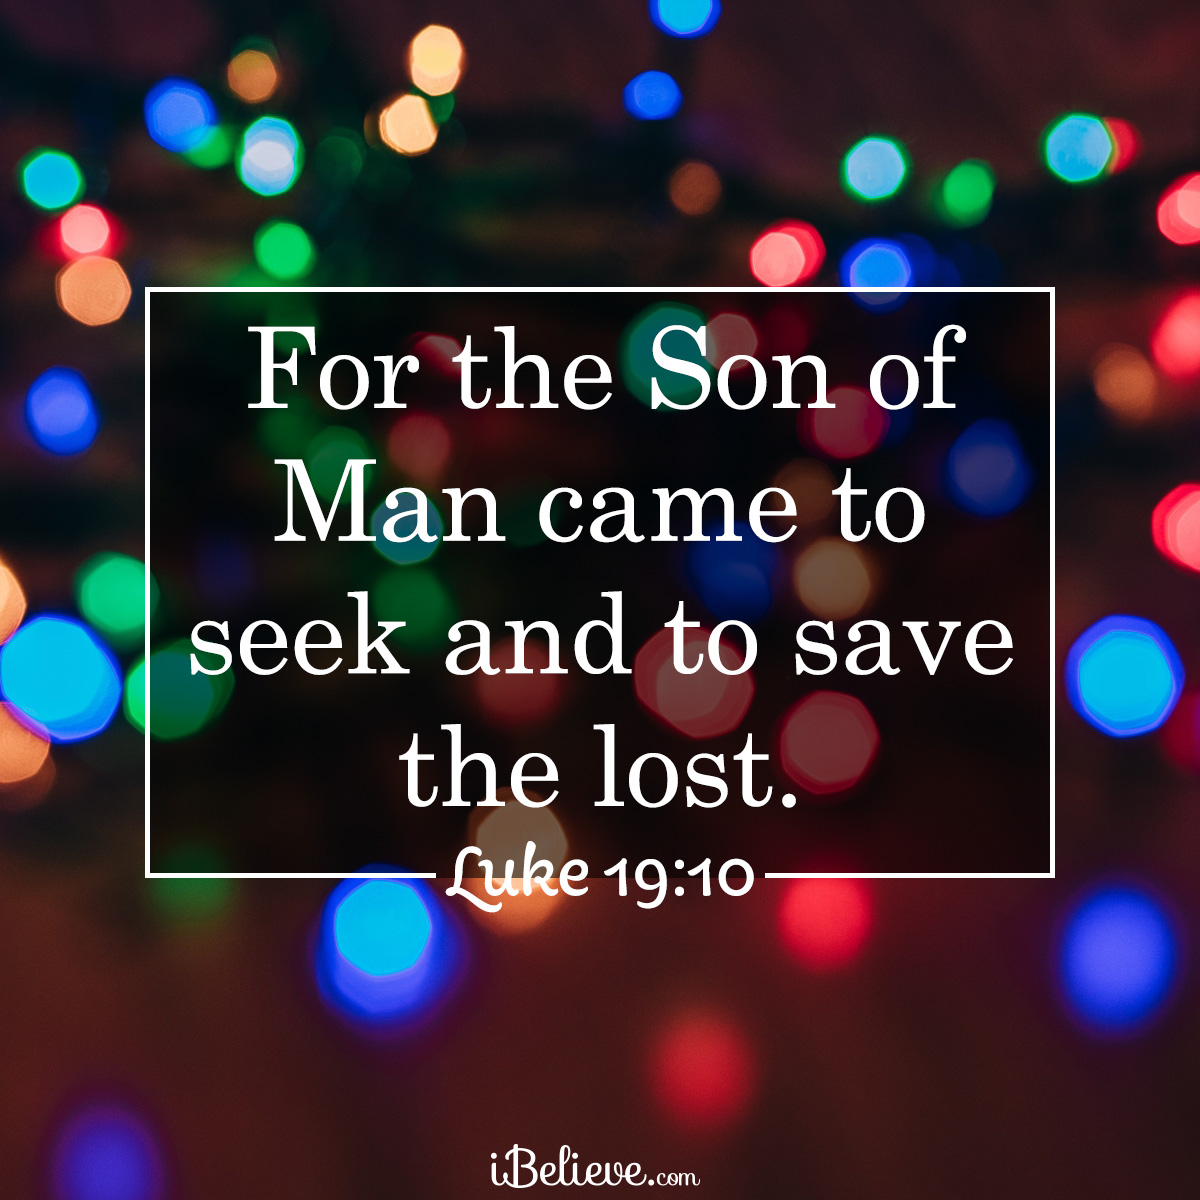 Luke 19:10, inspirational image